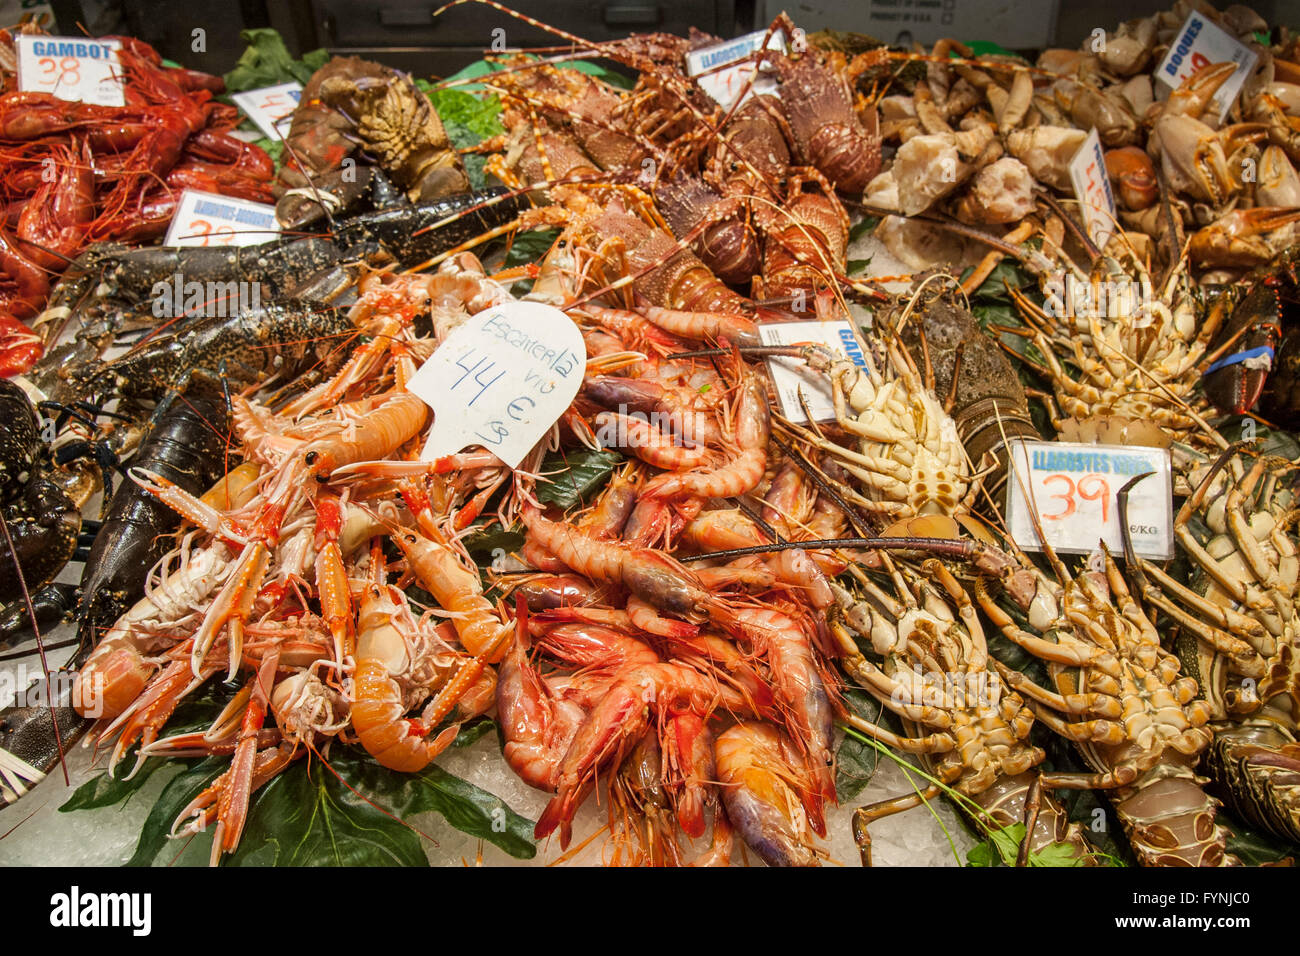 Seafood, Fish, Mercat de Sant Josep located on La Rambla, Boqueria market, Barcelona, Spain Stock Photo